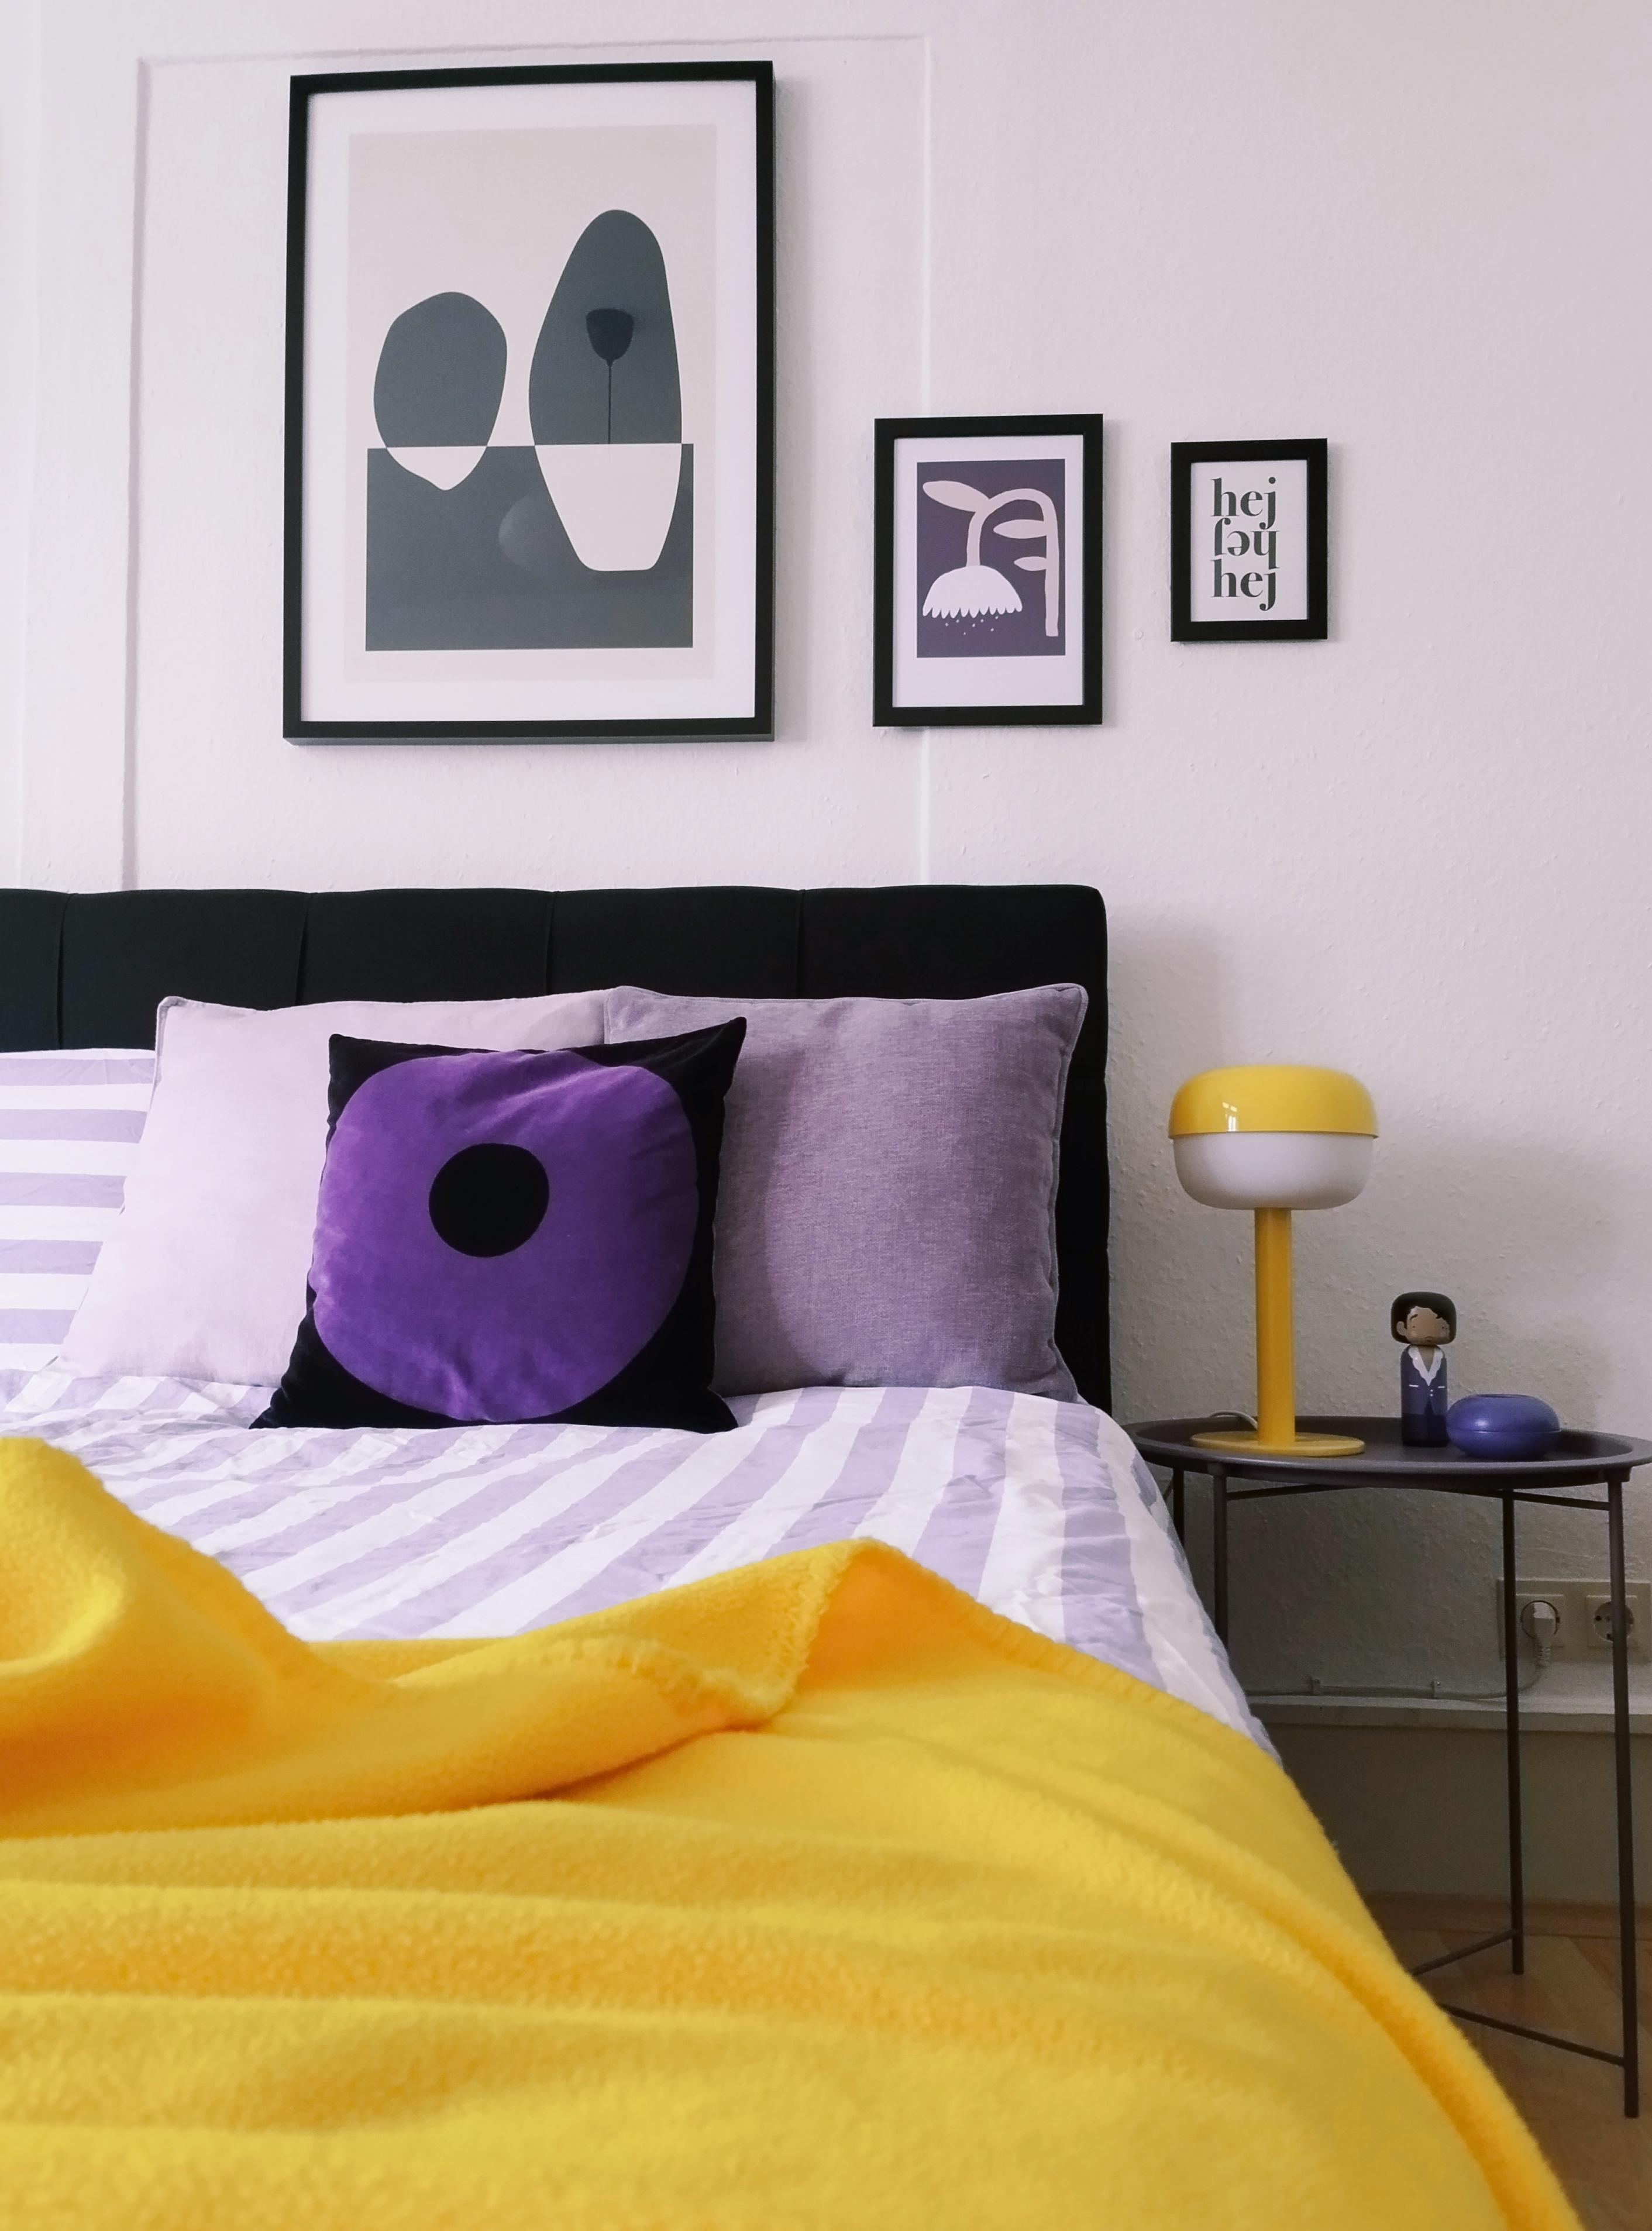 Kombiniere Lila mit Gelb haben sie gesagt....😉
#colourful #yellow #purpel #bedroom #colorpop #scandistyle #flieder